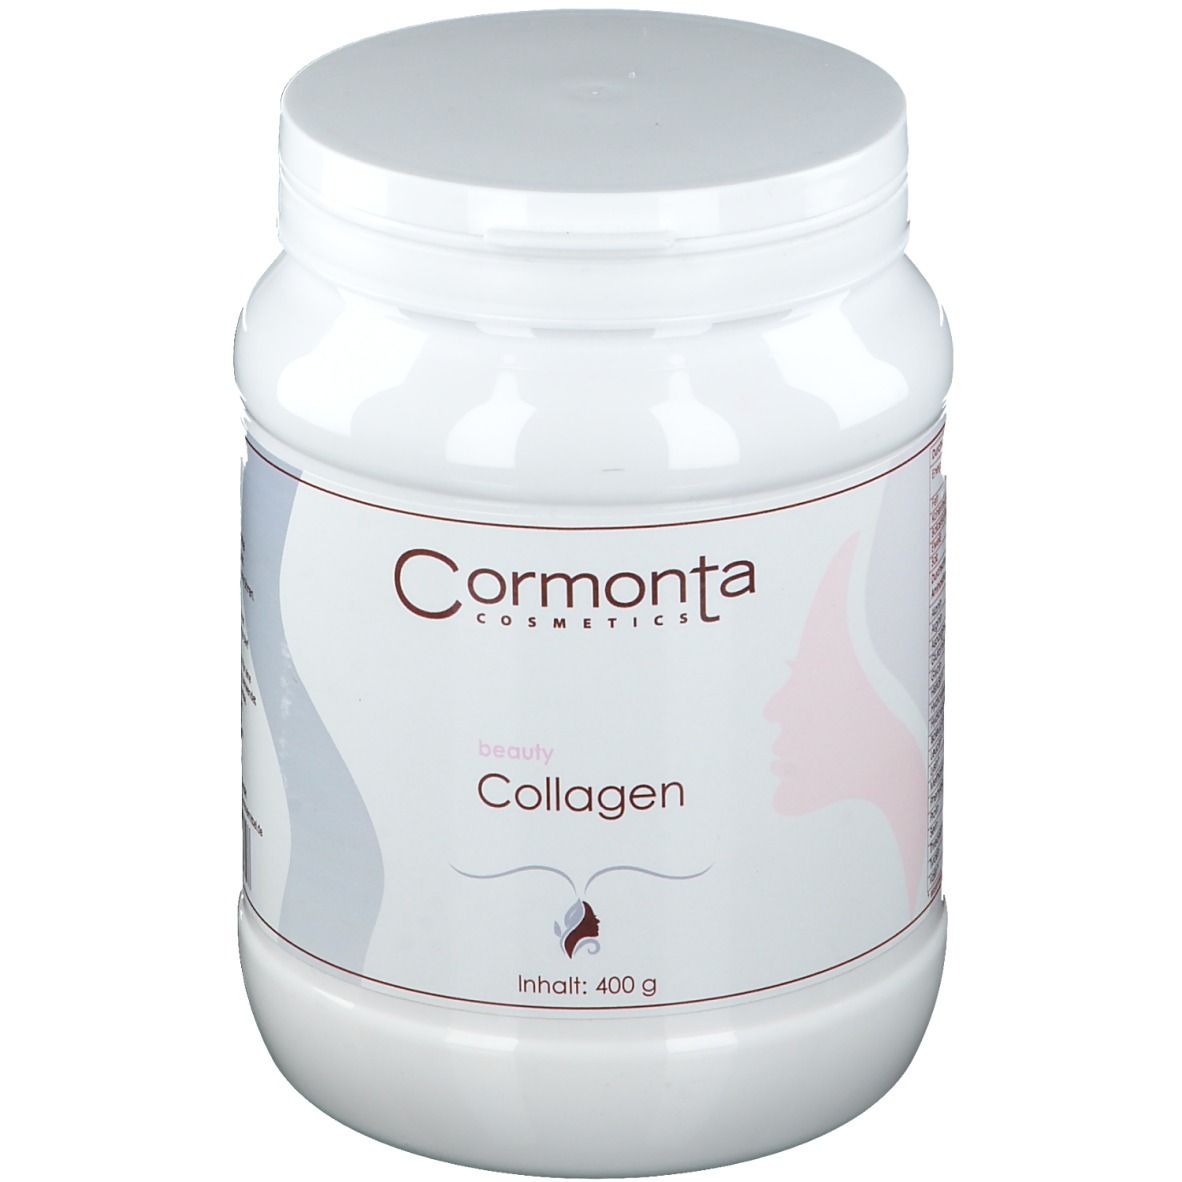 Image of Comonta Cosmetics Collagen Beauty